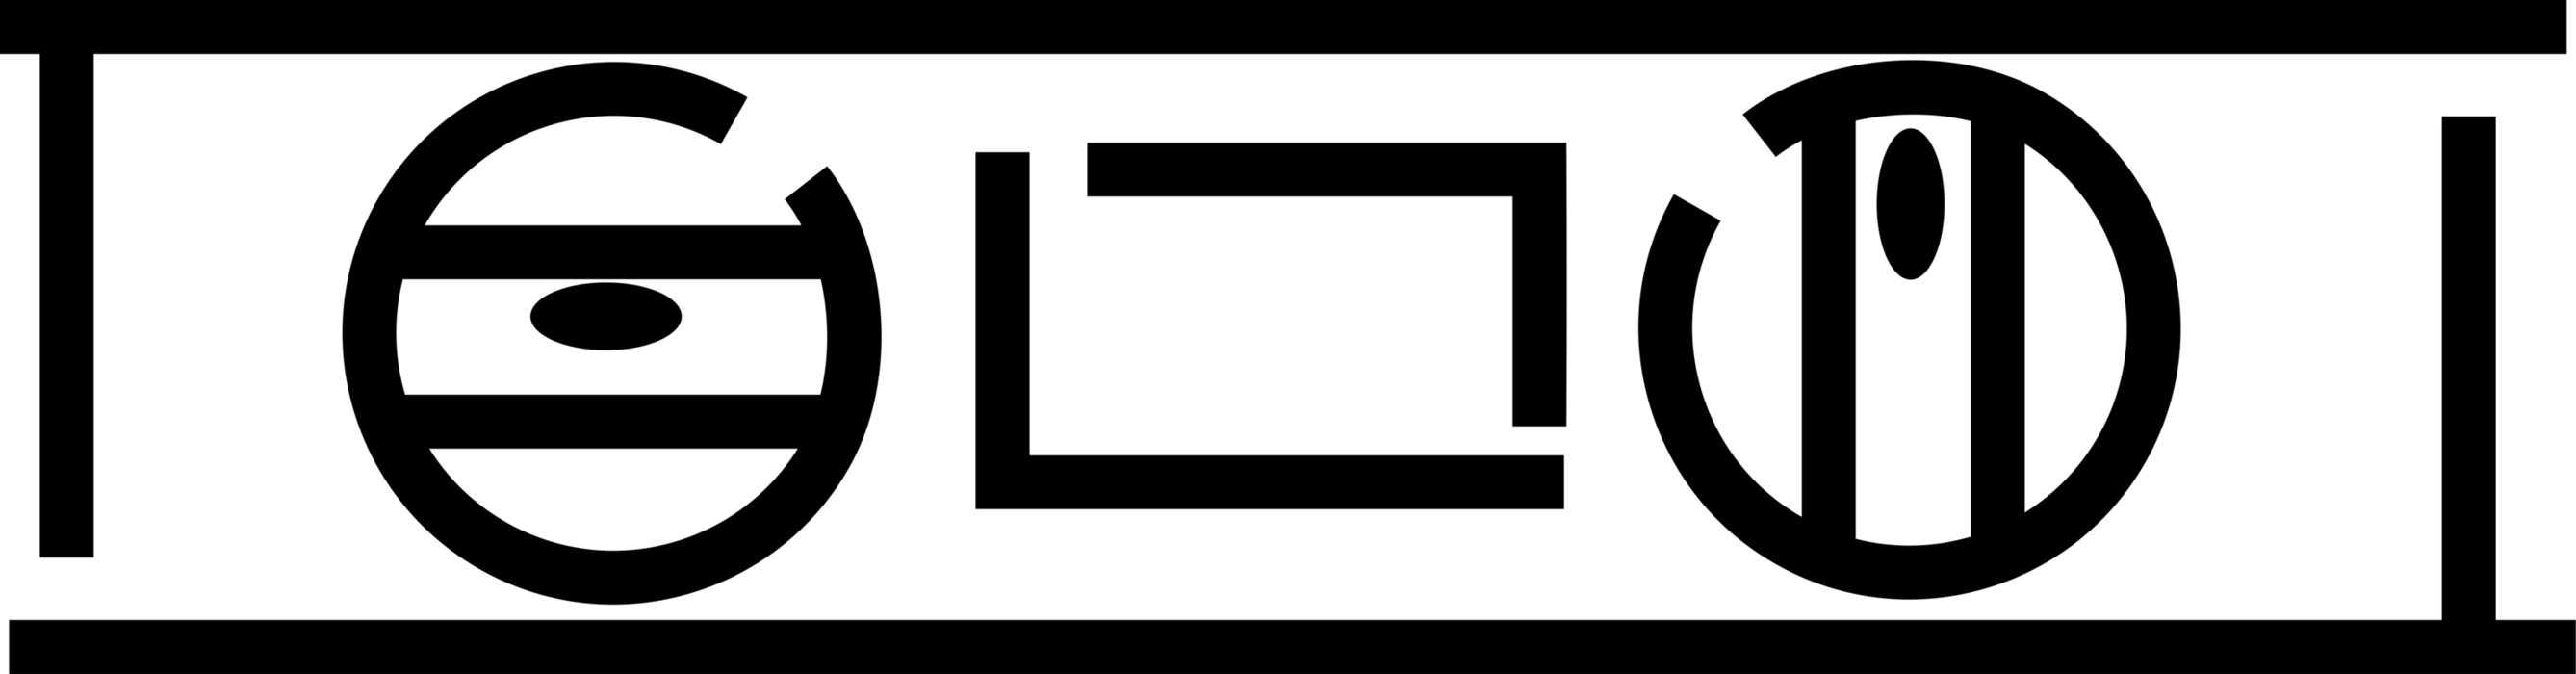 Vector Illustration of Carpenter's Spirit or Bubble Level Horizontal or Vertical Levelling Instrument